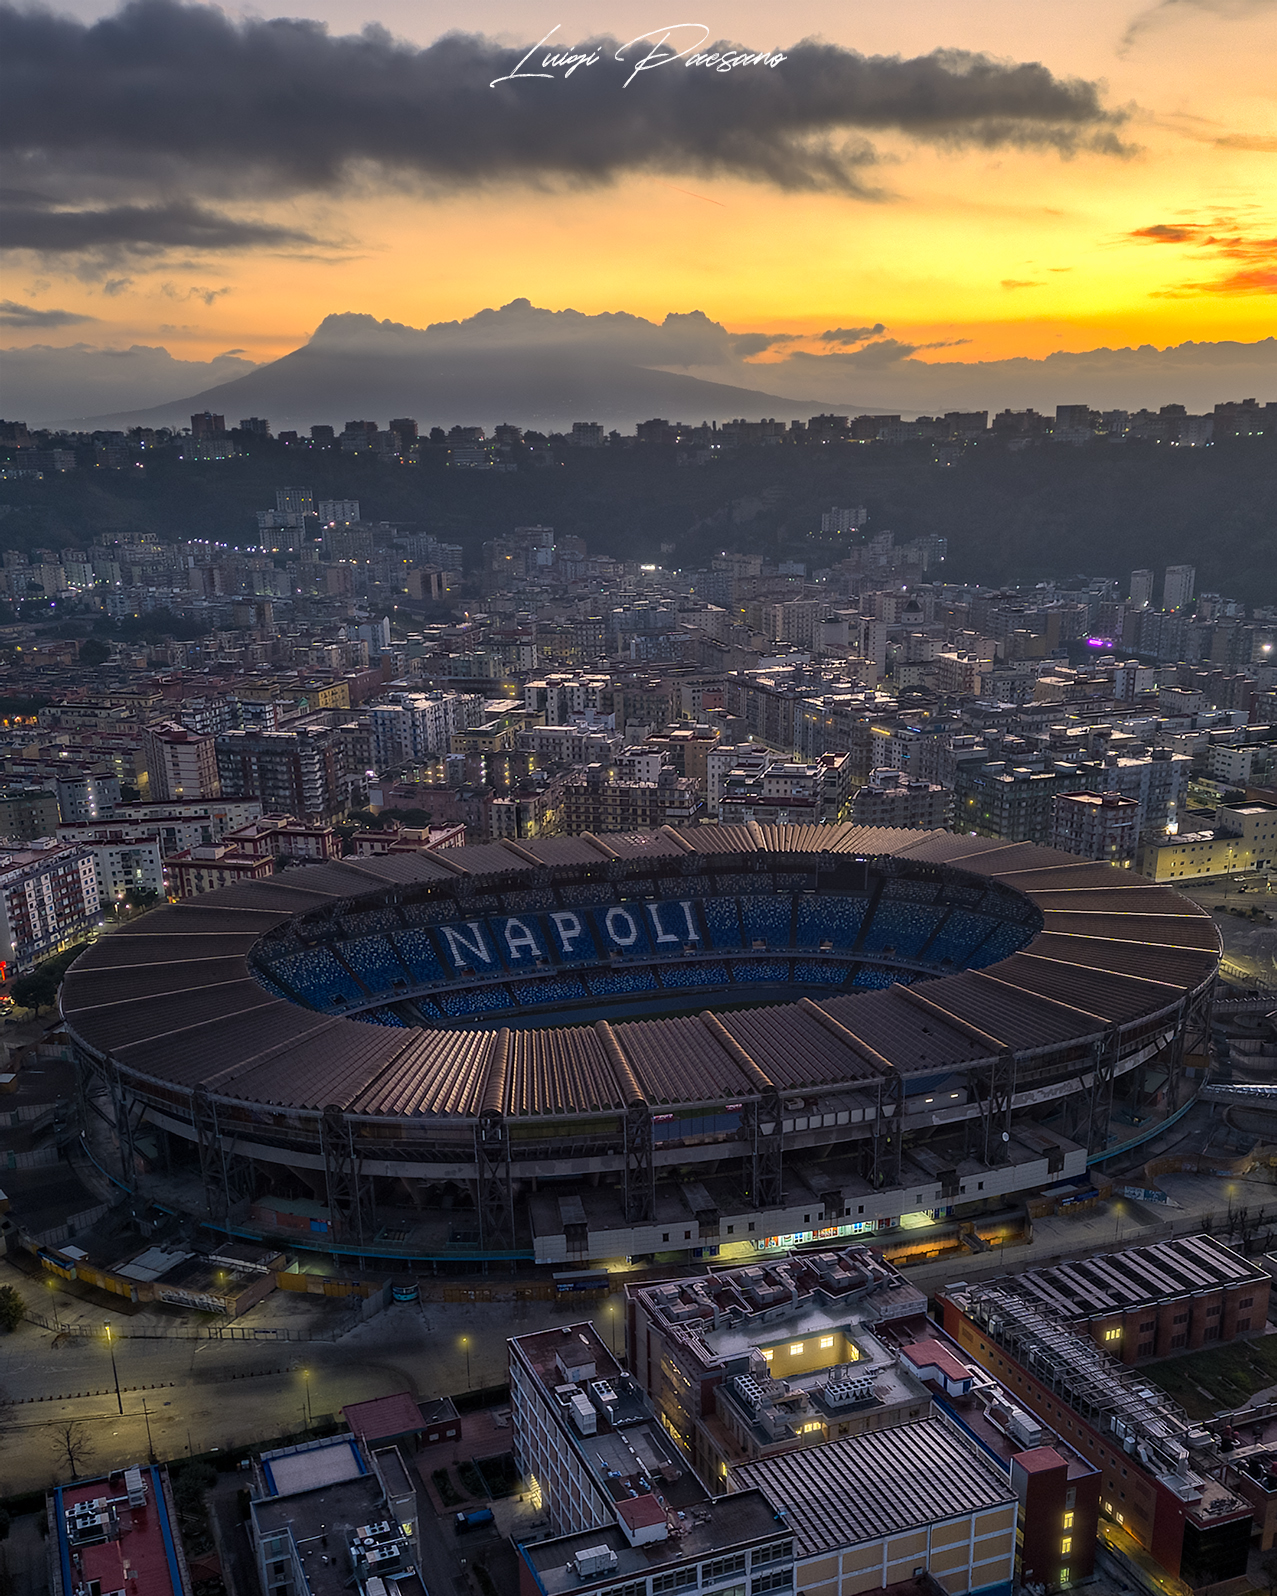 Stadio Maradona all'alba...